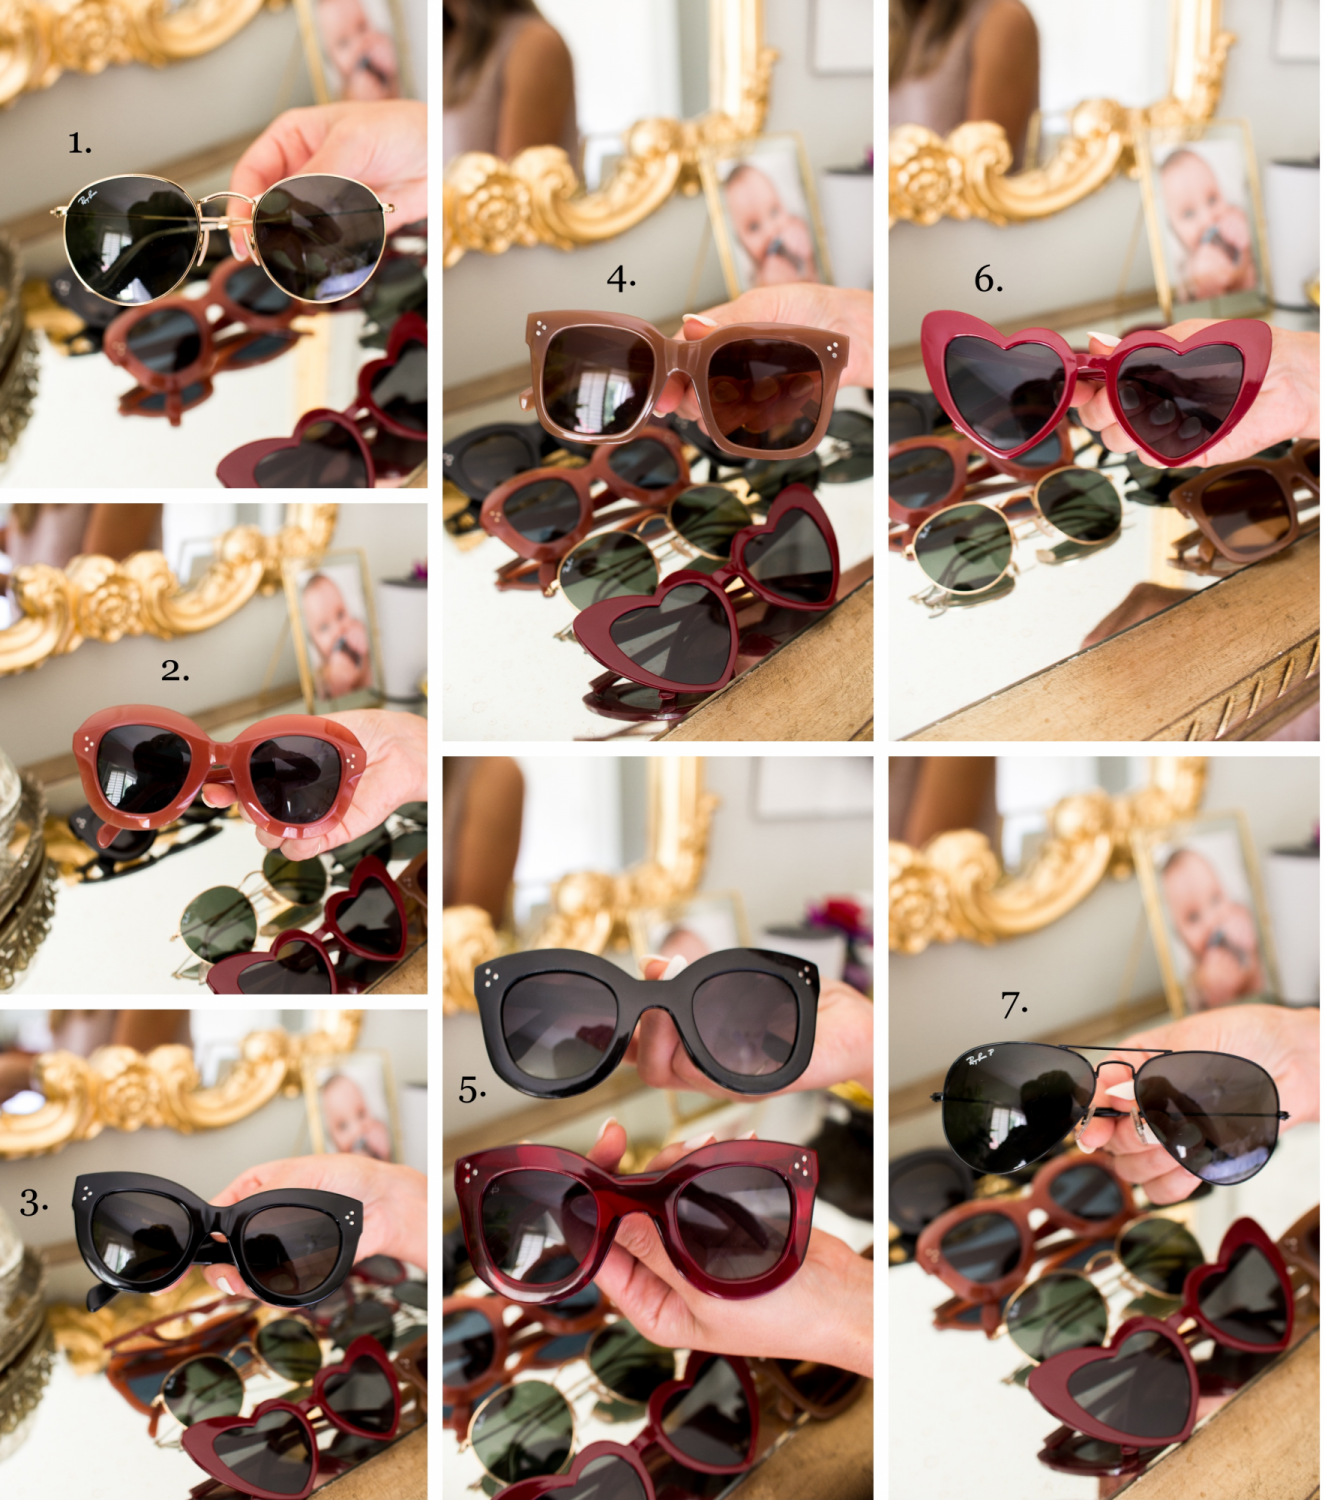 most worn sunglasses